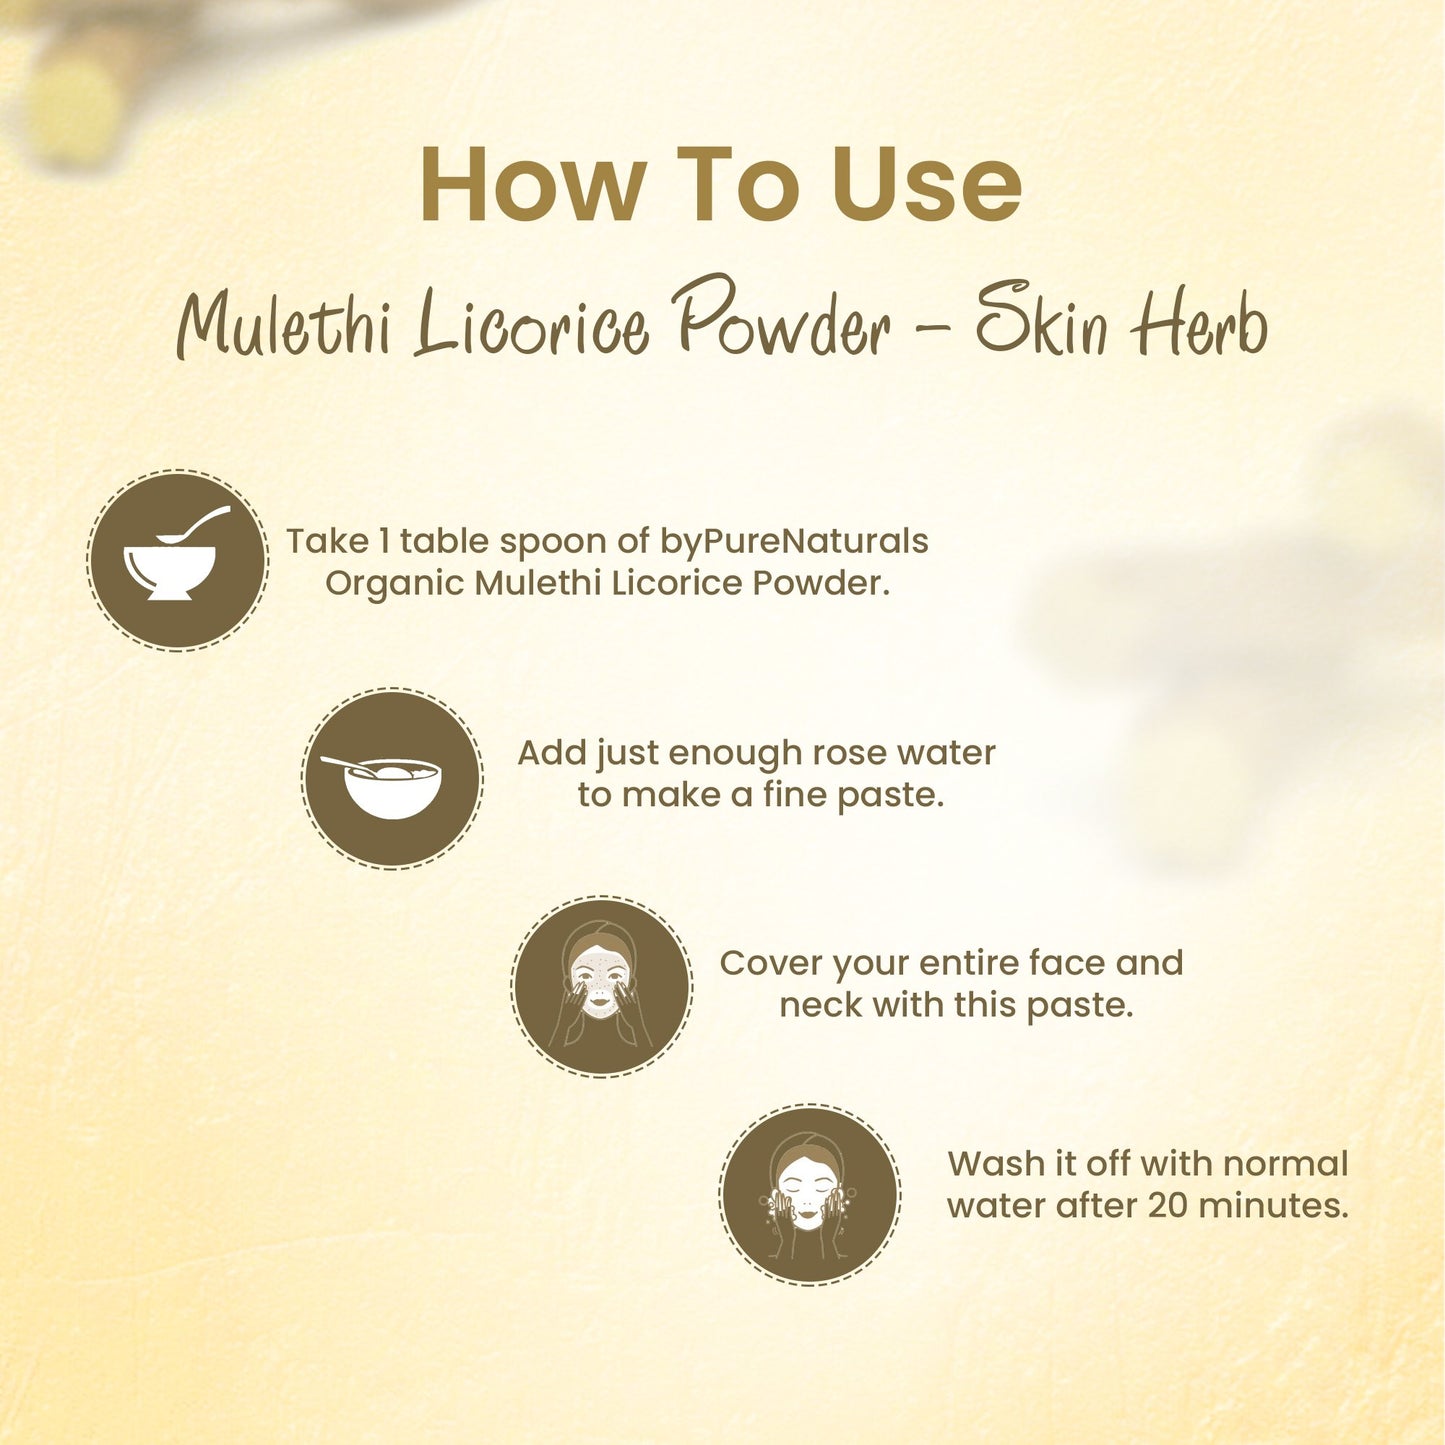 How to use Organic Mulethi licorice powder bypurenaturals infographic